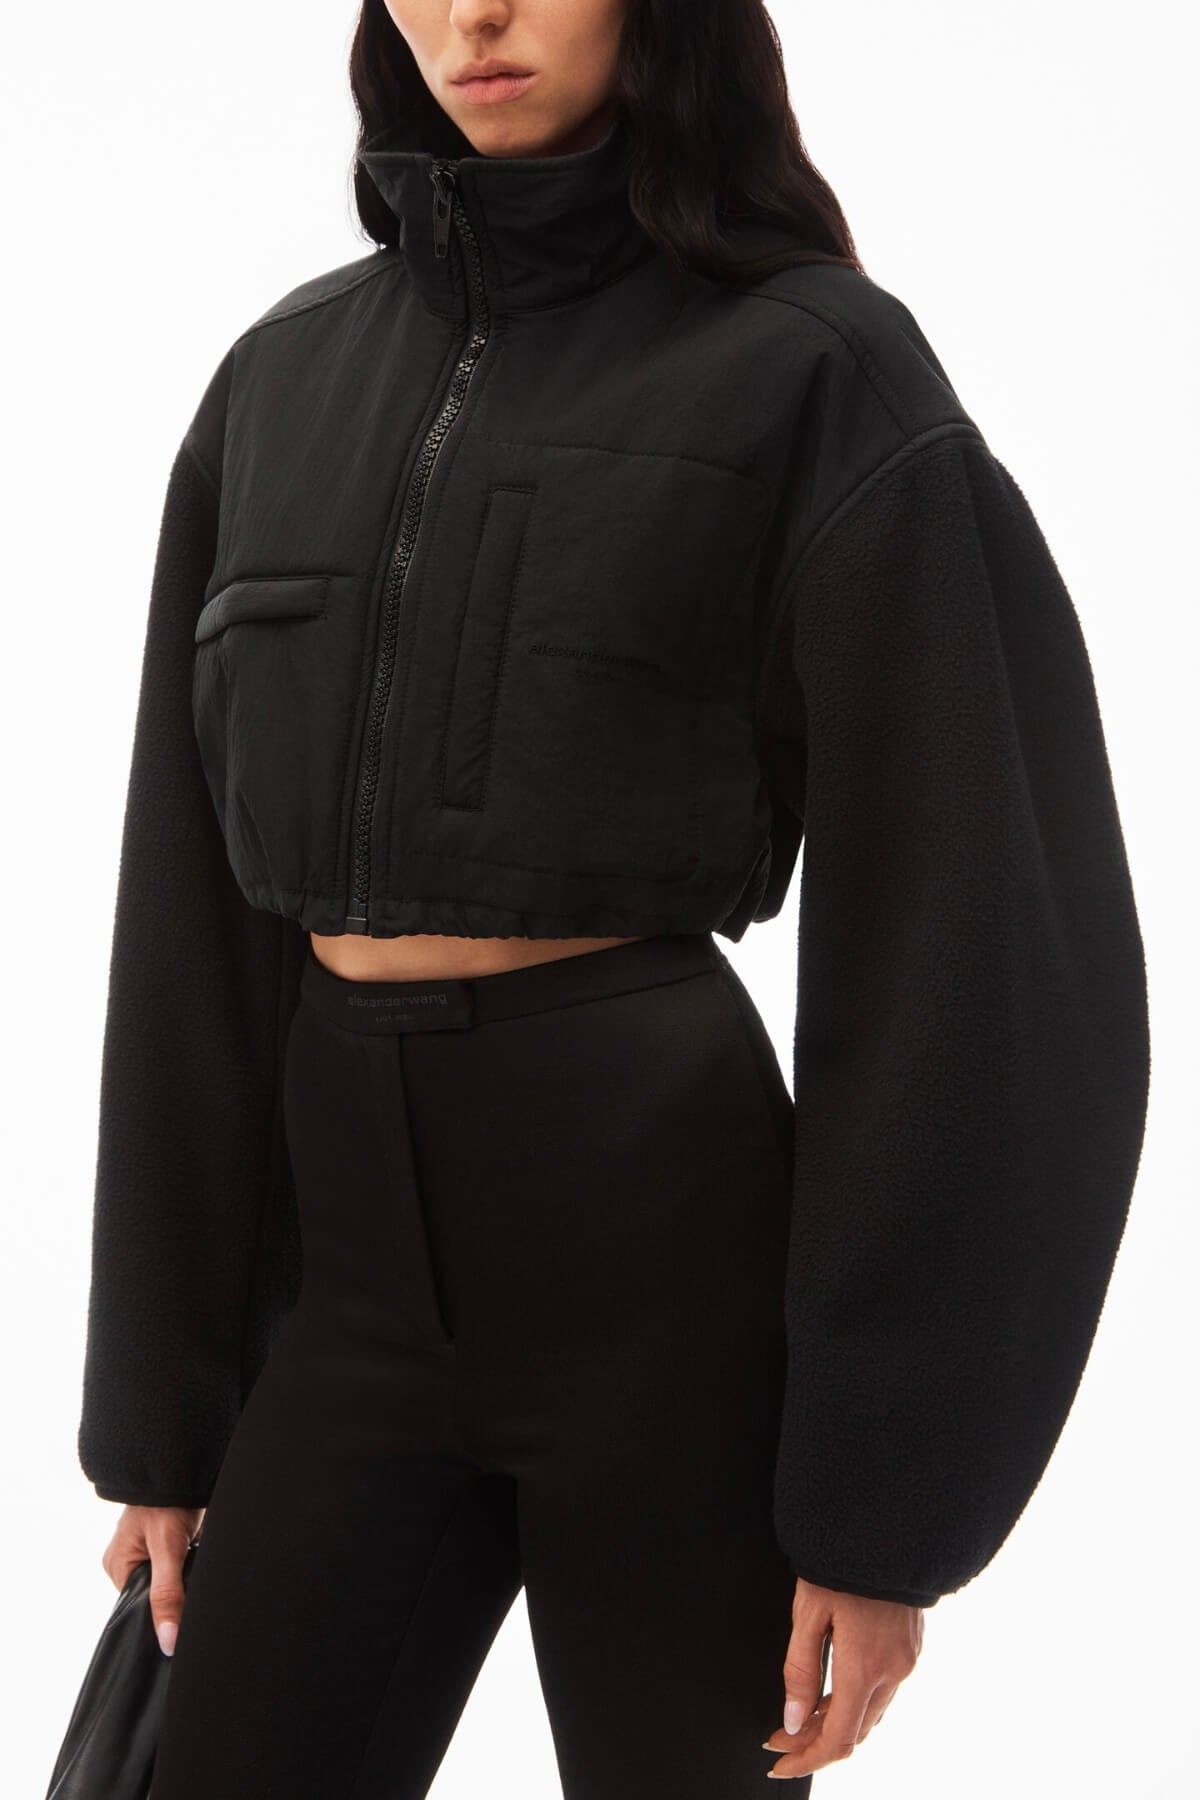 Alexander Wang Cropped Fleece Jacket - Black